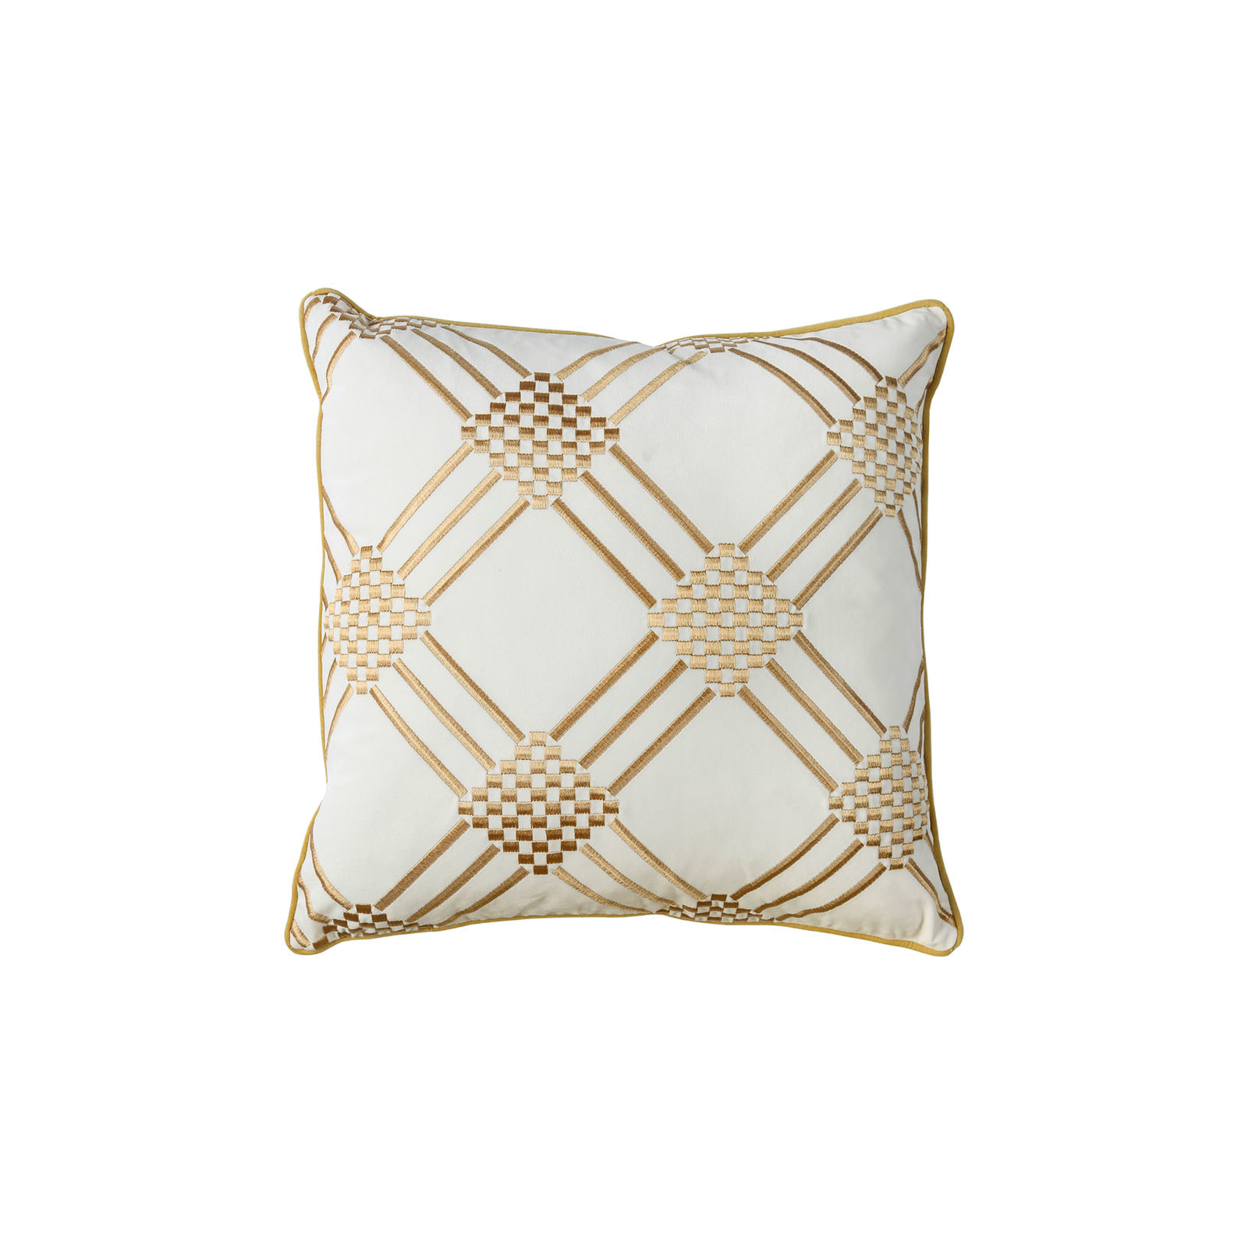 Contemporary Style Set Of 2 Throw Pillows With Diamond Patterns, Ivory, Yellow- Saltoro Sherpi